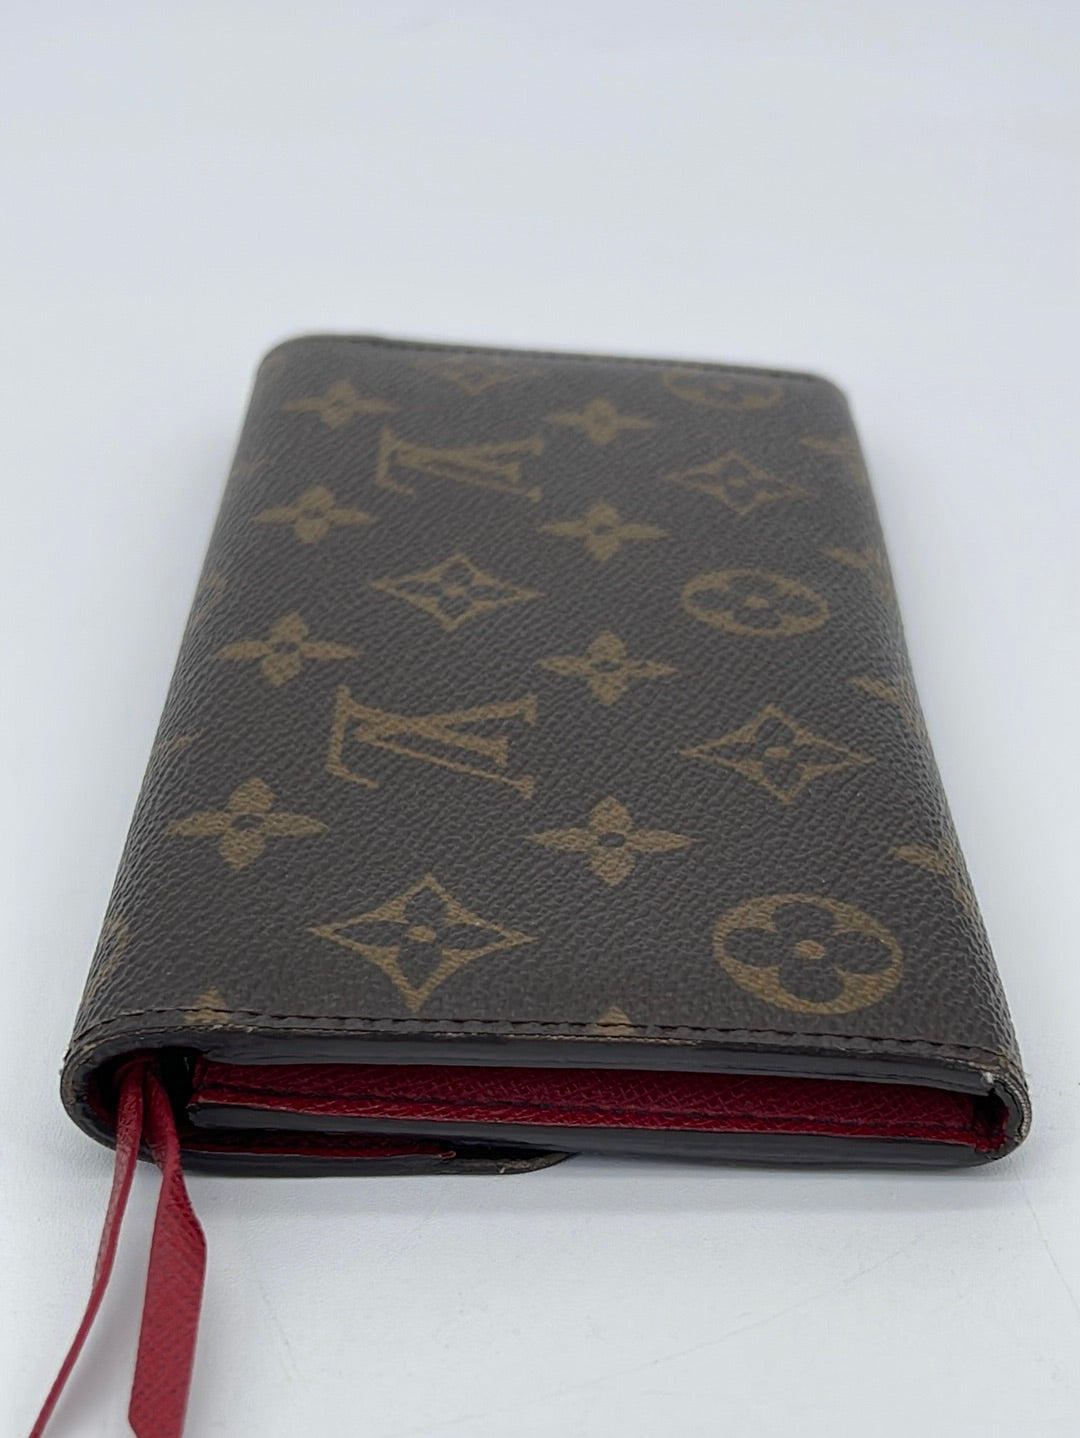 Louis Vuitton Mens Wallet Red Inside